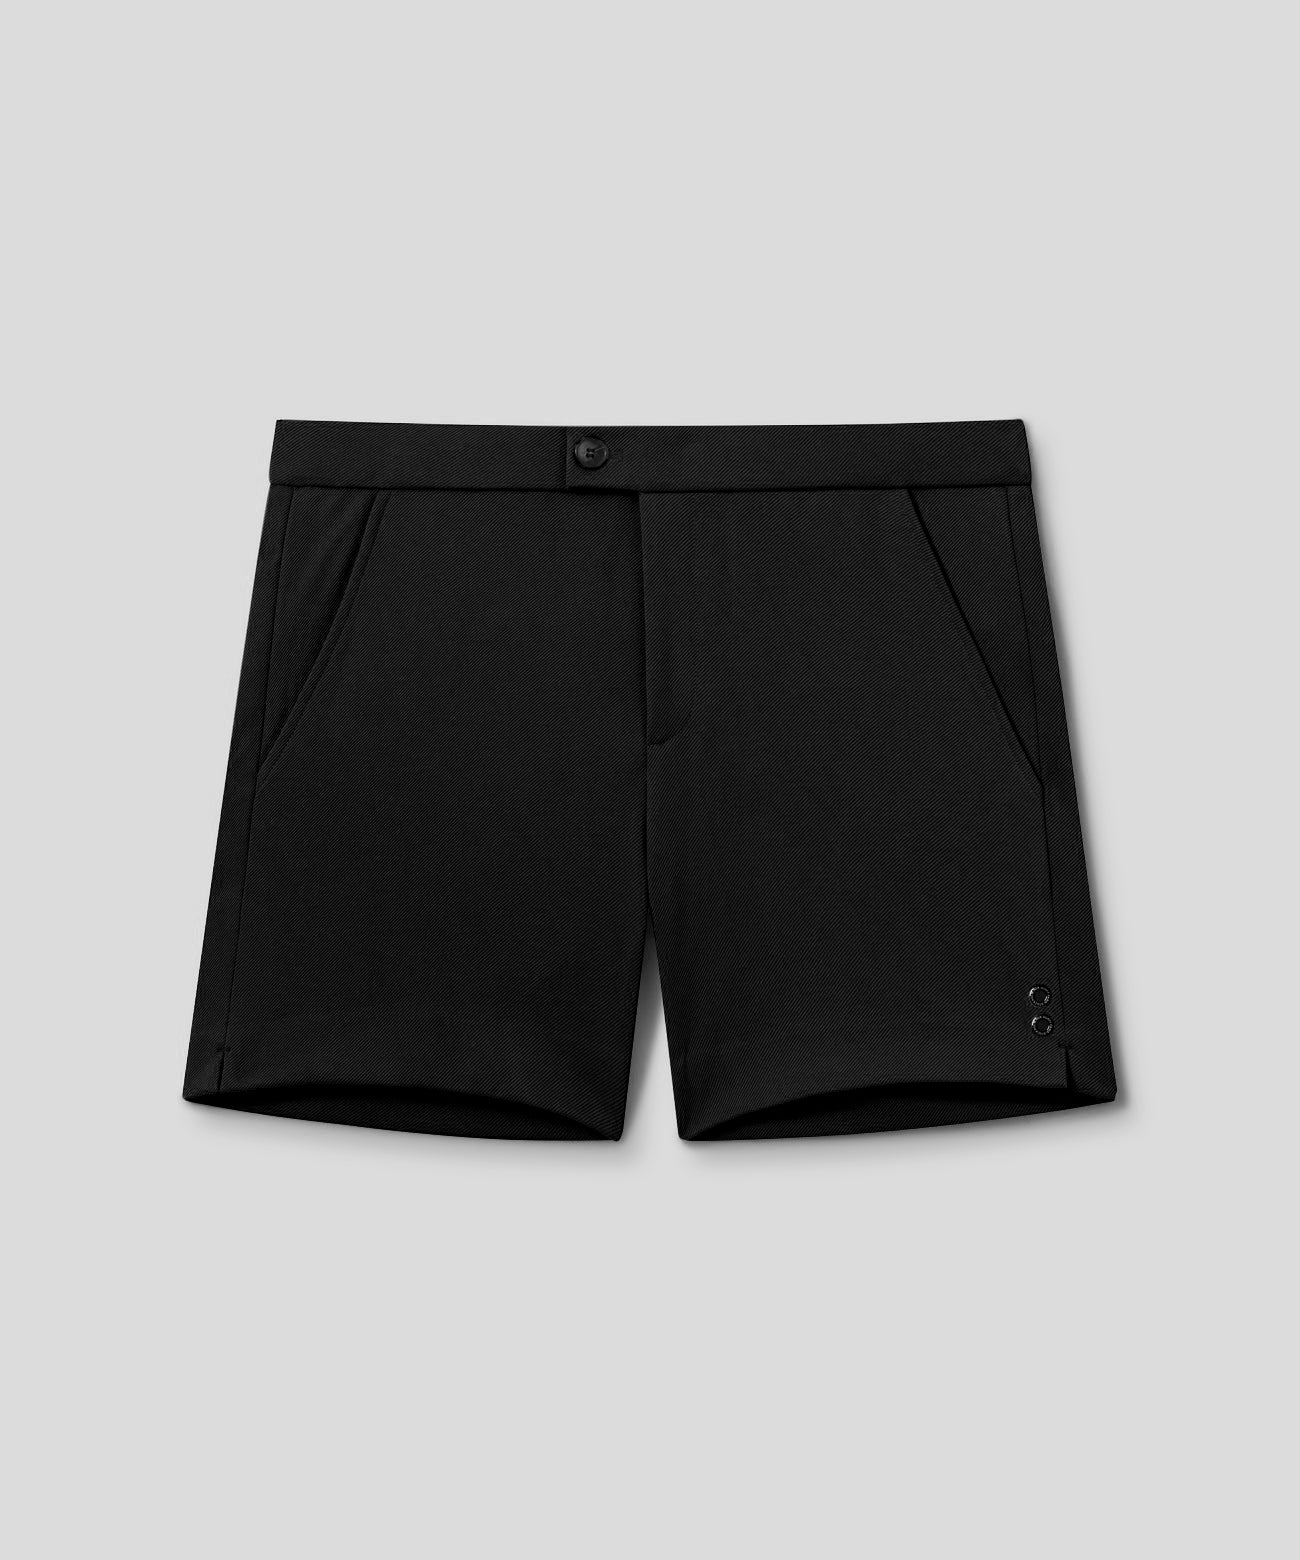 Tennis Shorts: Black